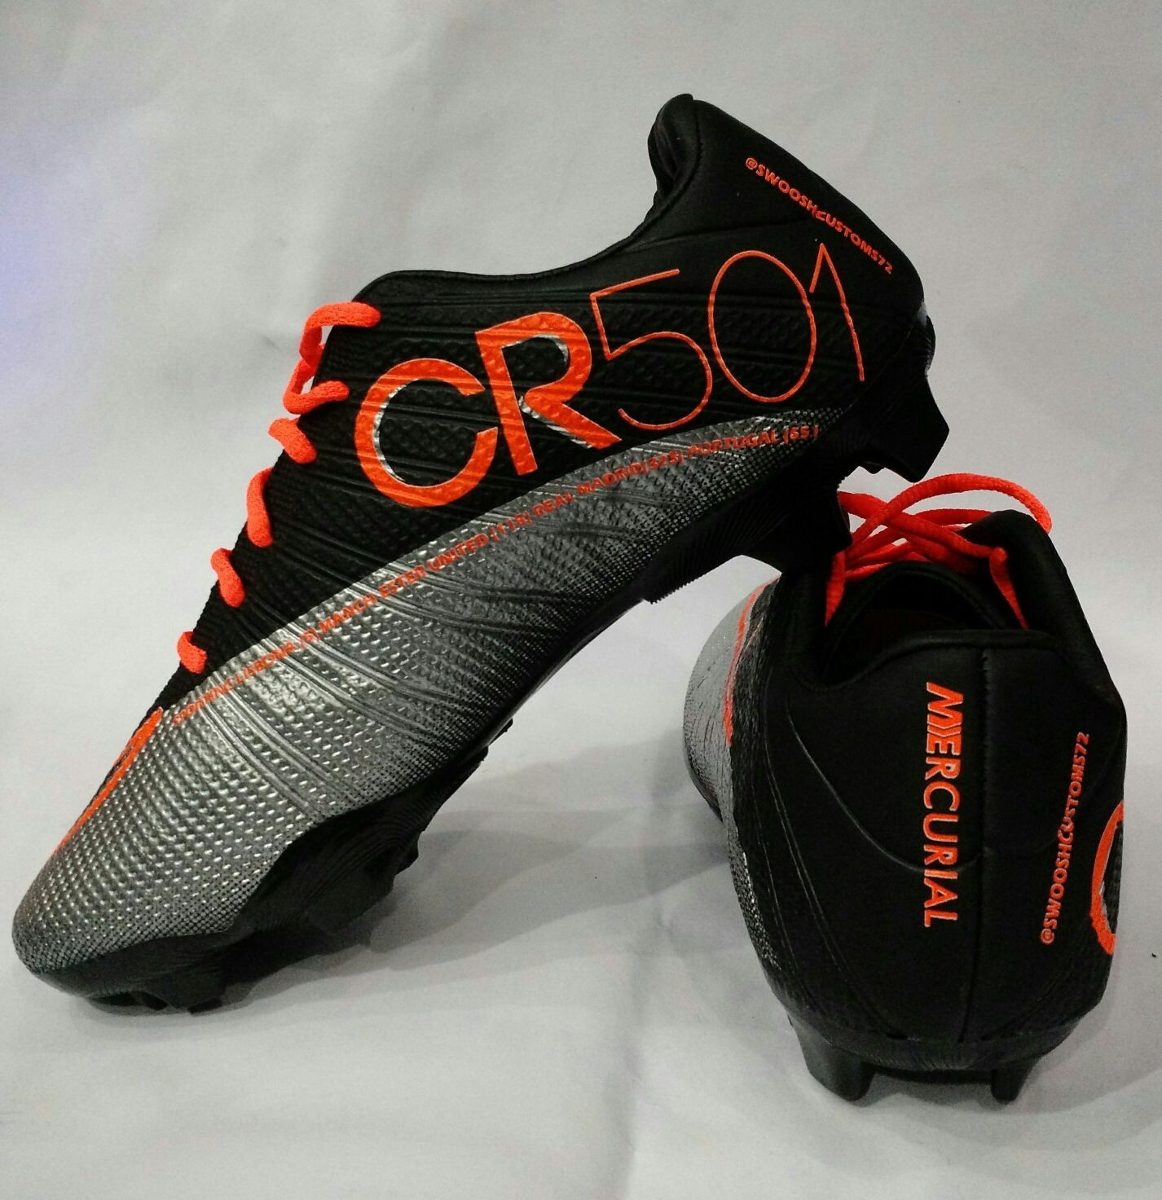 Nike Vapor Flyknit Ultra Black Red FG Football Boots World